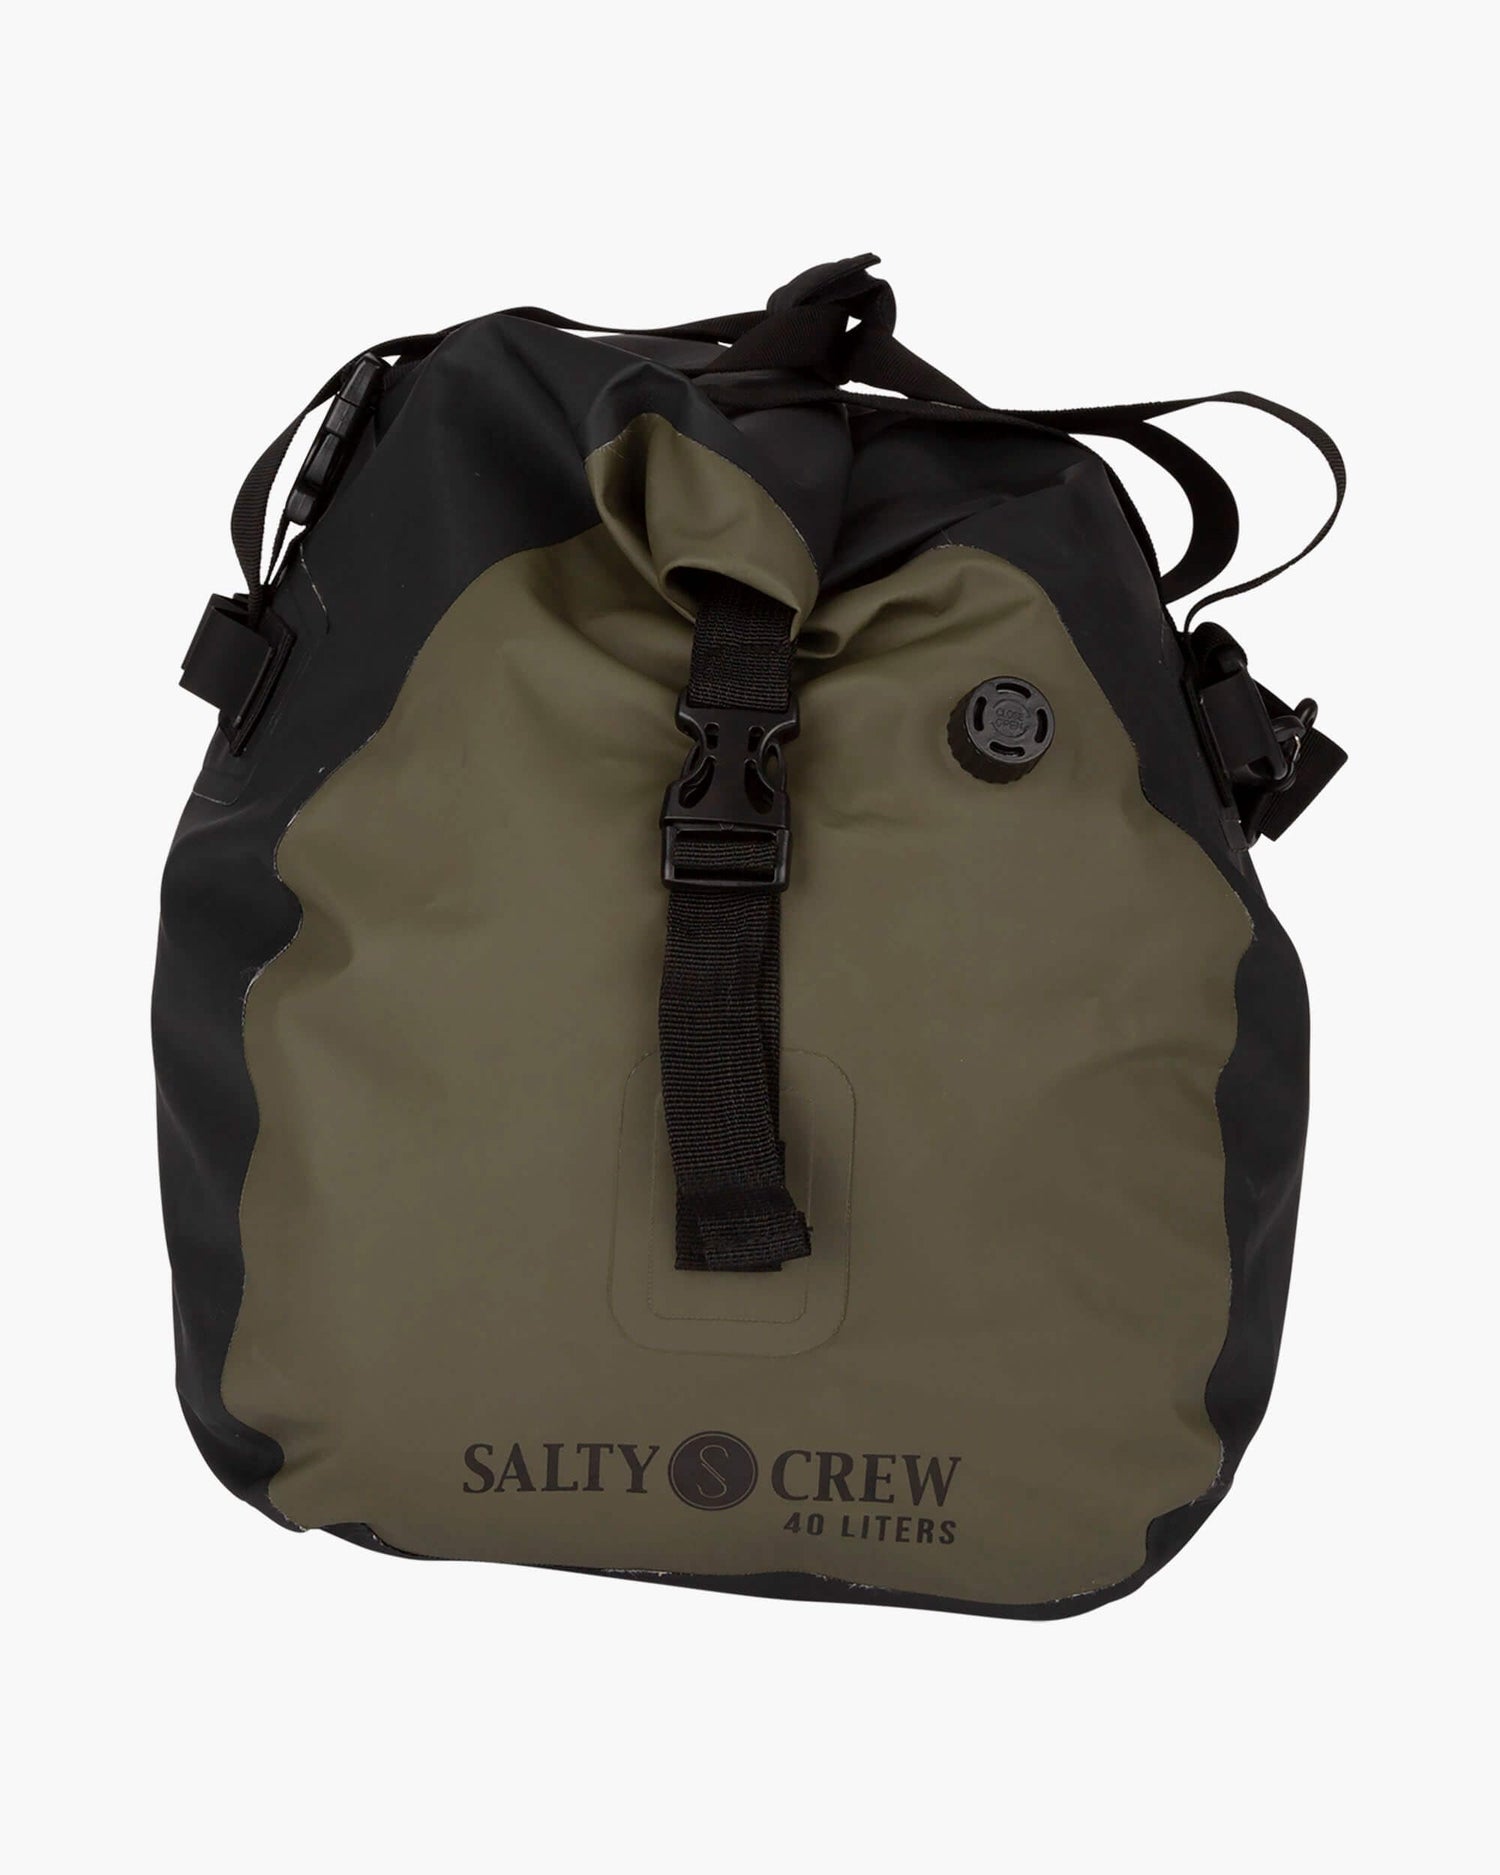 Salty Crew Hommes - Voyager Black/Military Duffle Bag